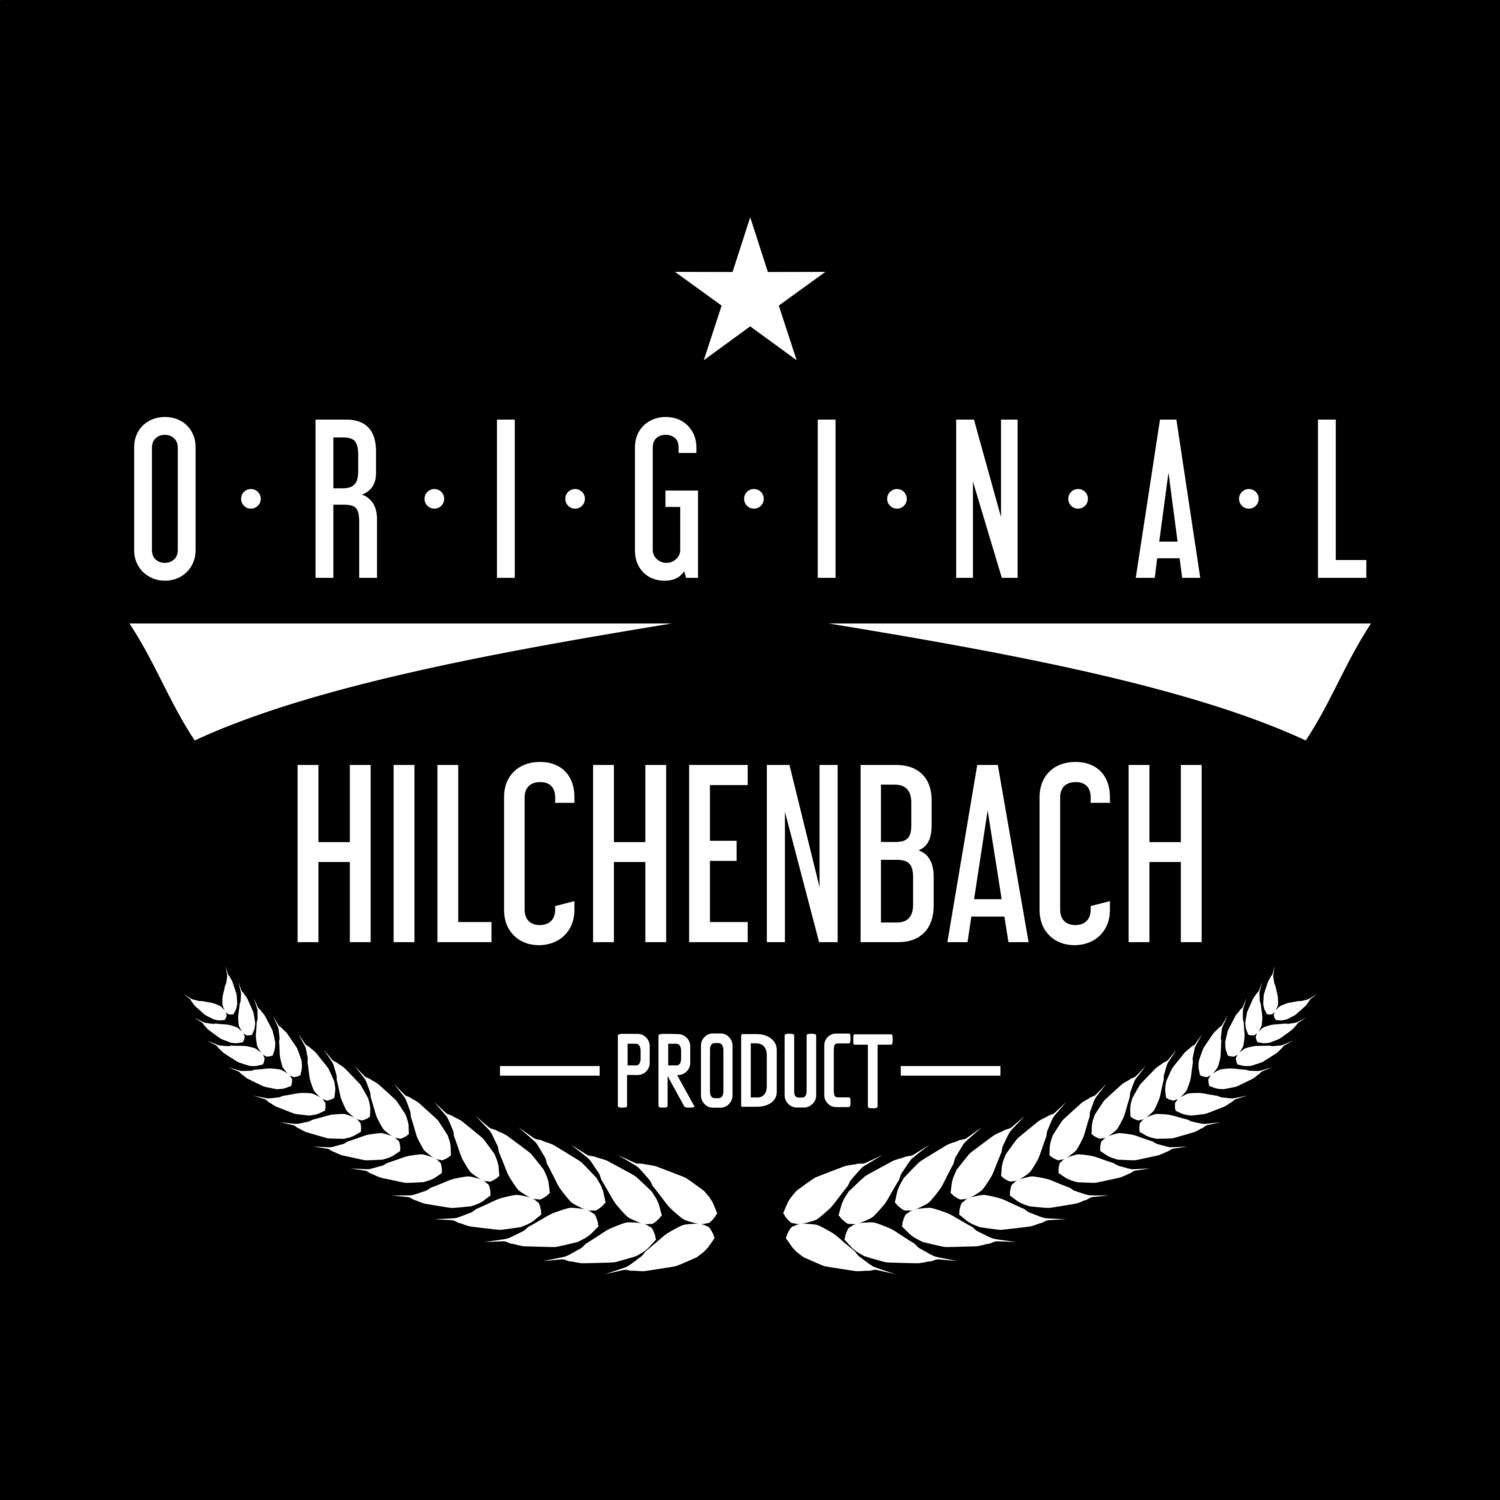 Hilchenbach T-Shirt »Original Product«